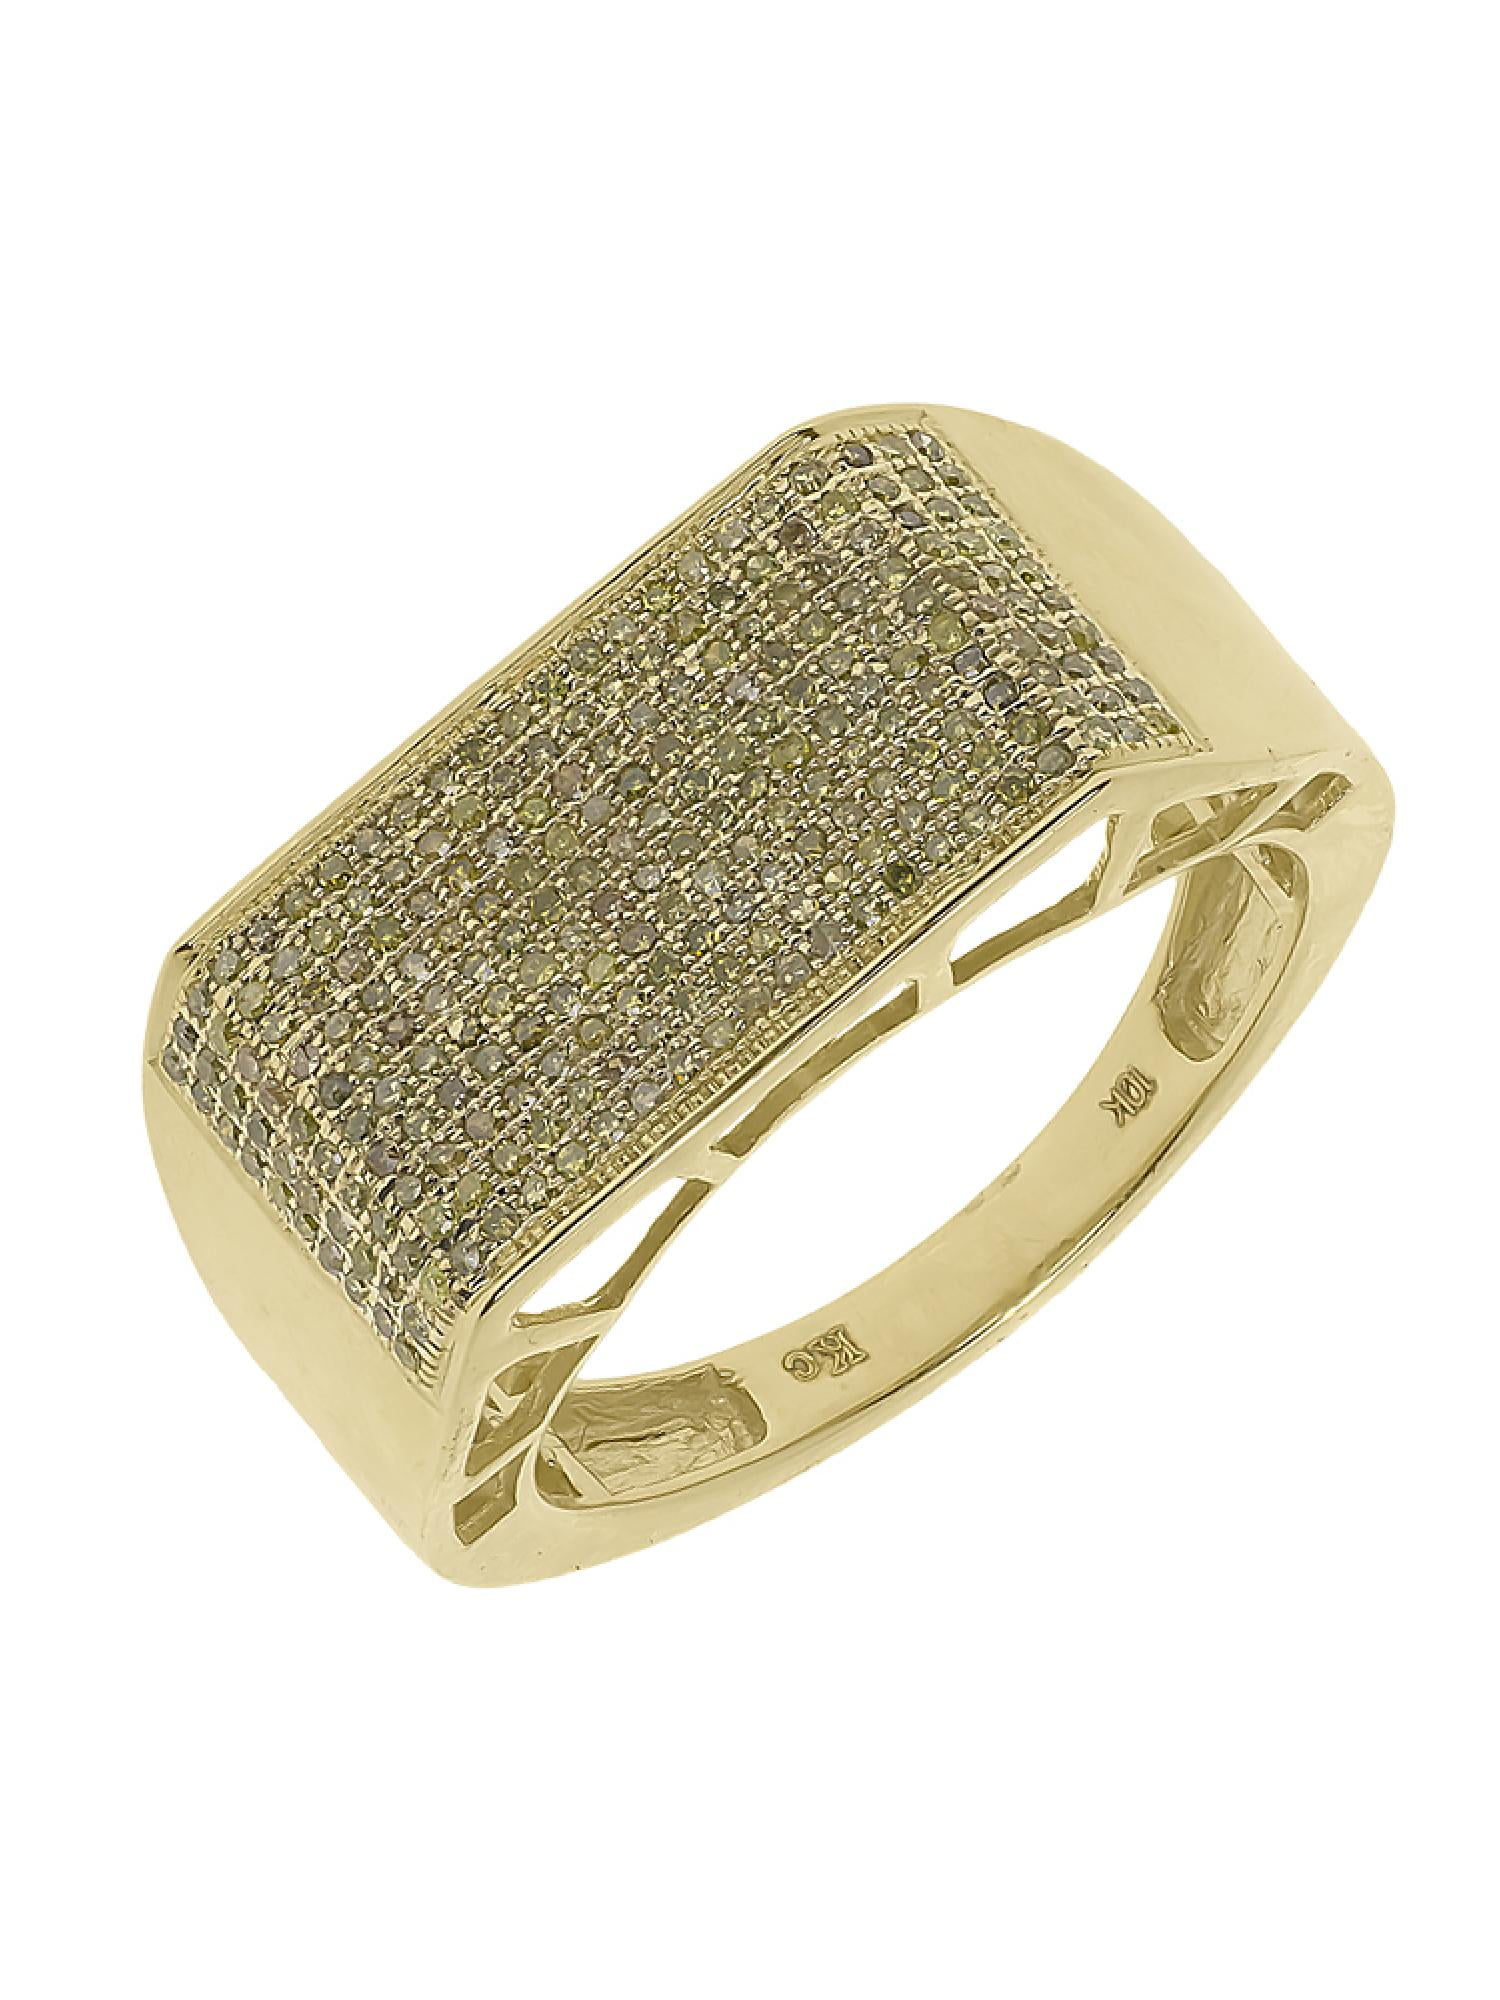 matte finish gold Wedding Ring Designs for women ADLR417G